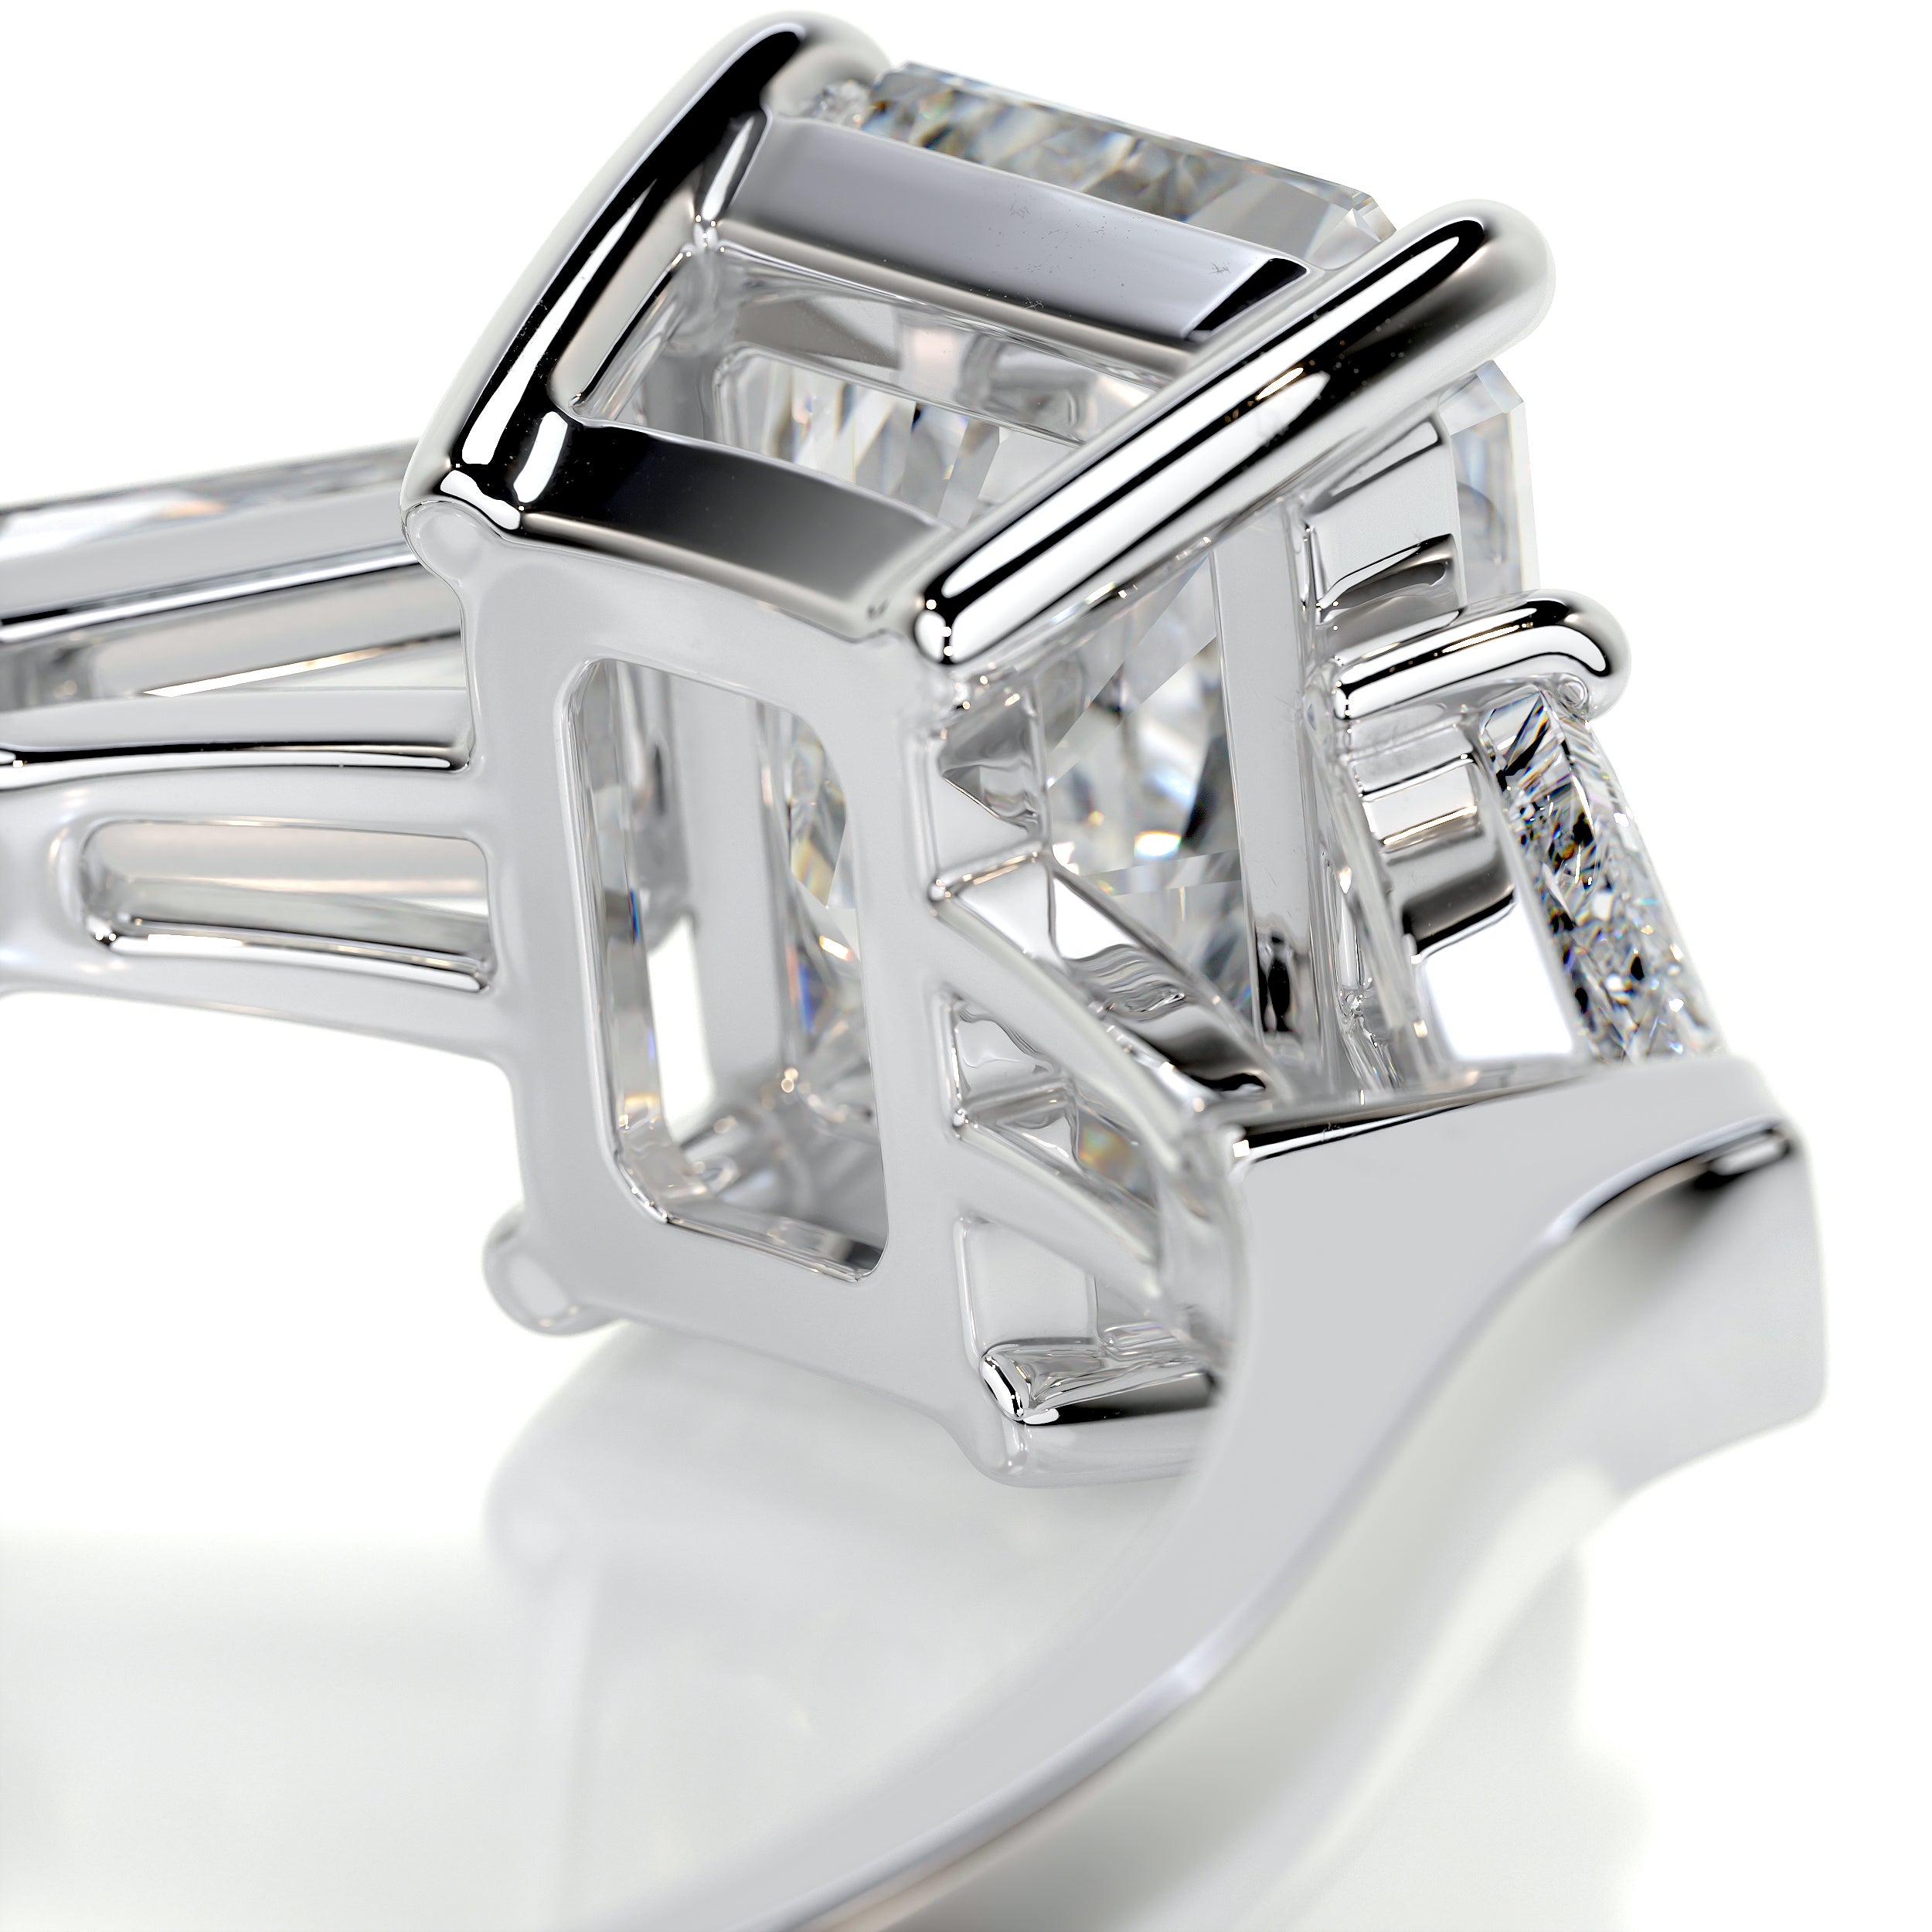 Skylar Diamond Engagement Ring   (1.8 Carat) -18K White Gold